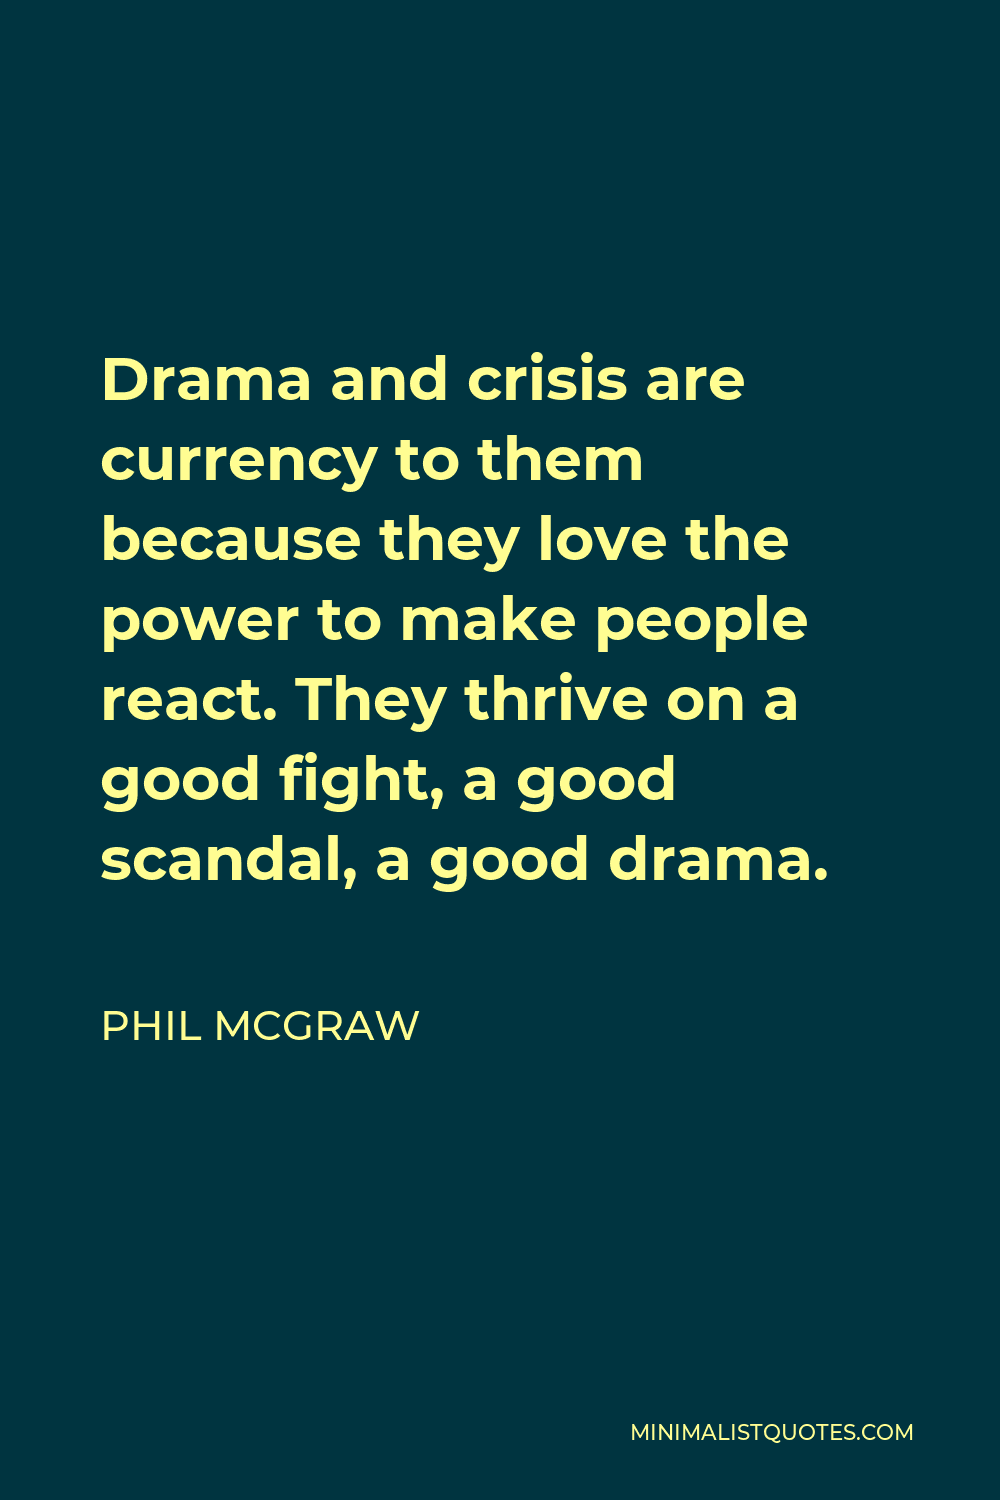 what makes a good drama